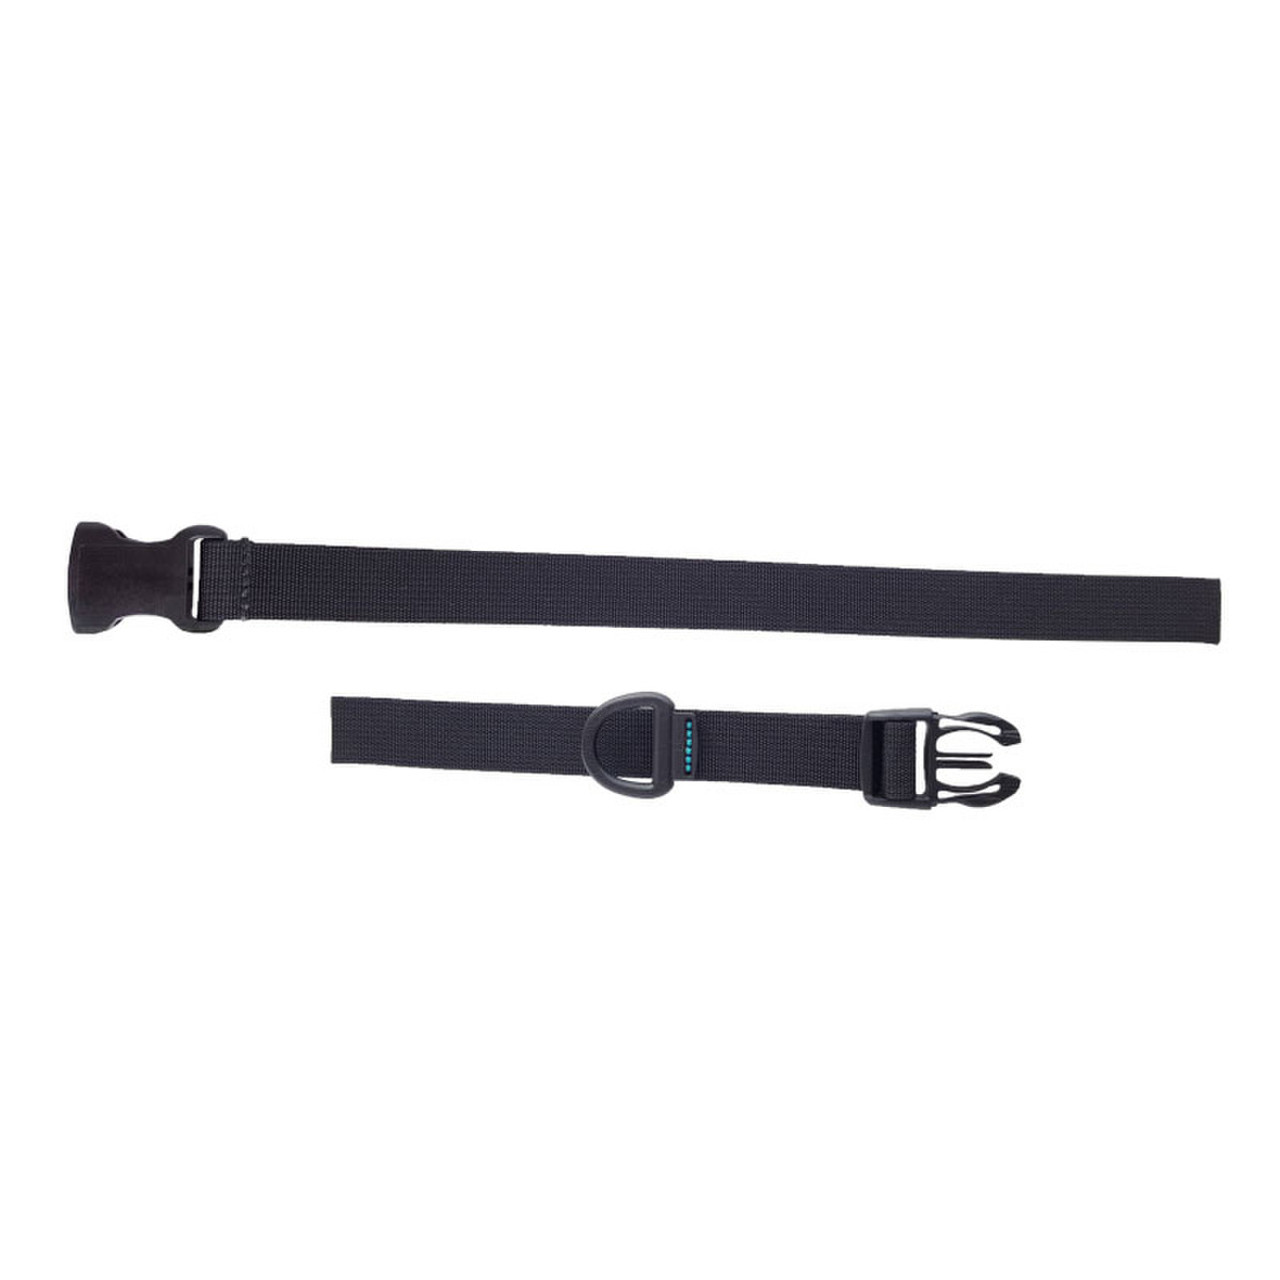 Bodypoint Universal Elastic Strap, Black, Large